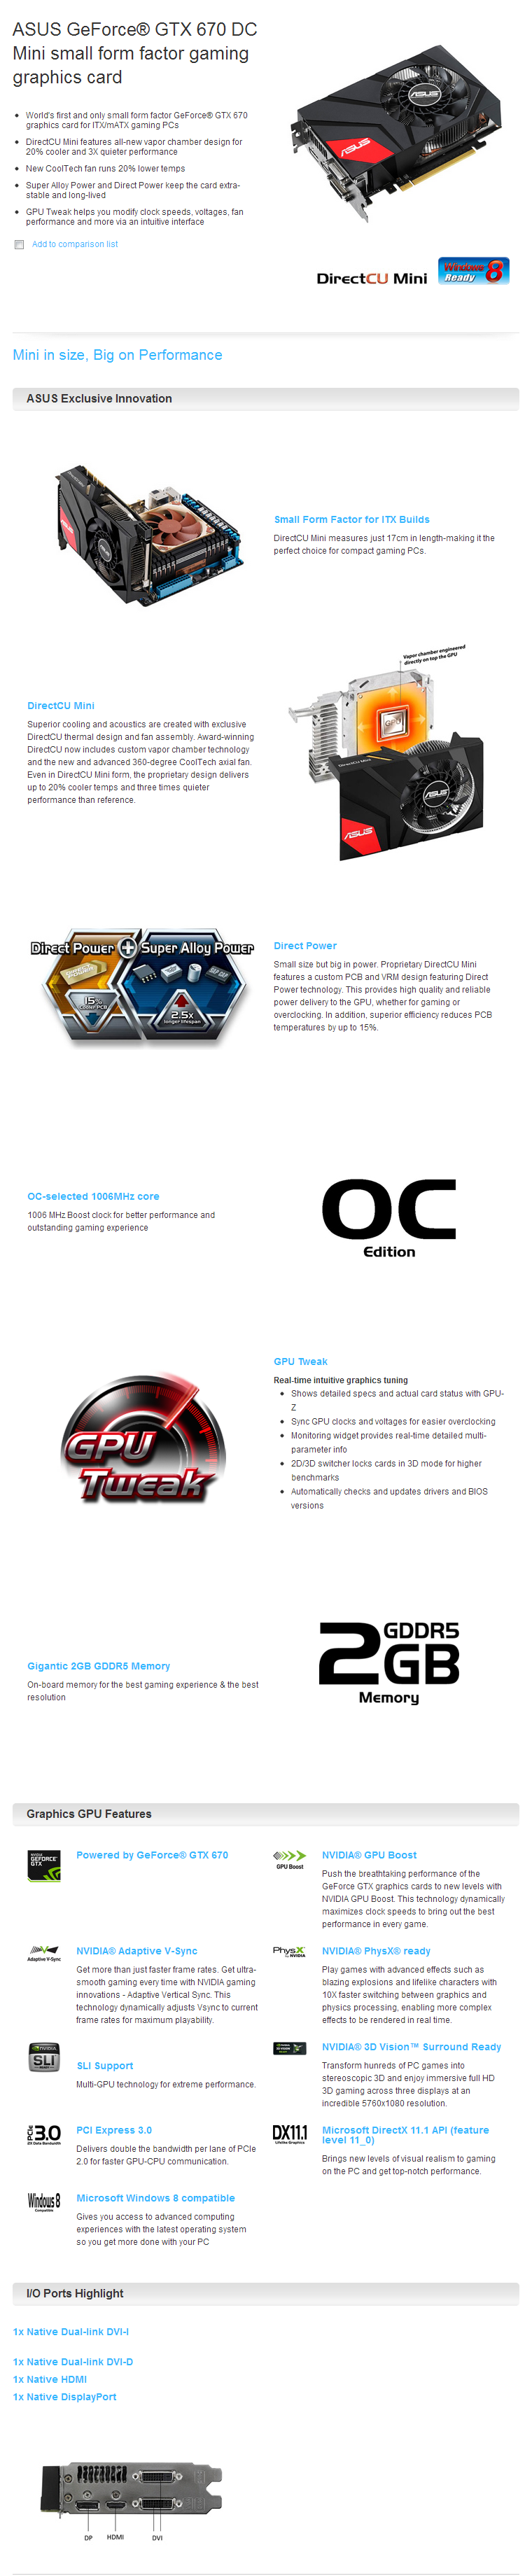 intro 01 ASUS GeForce GTX 670 DC Mini Review